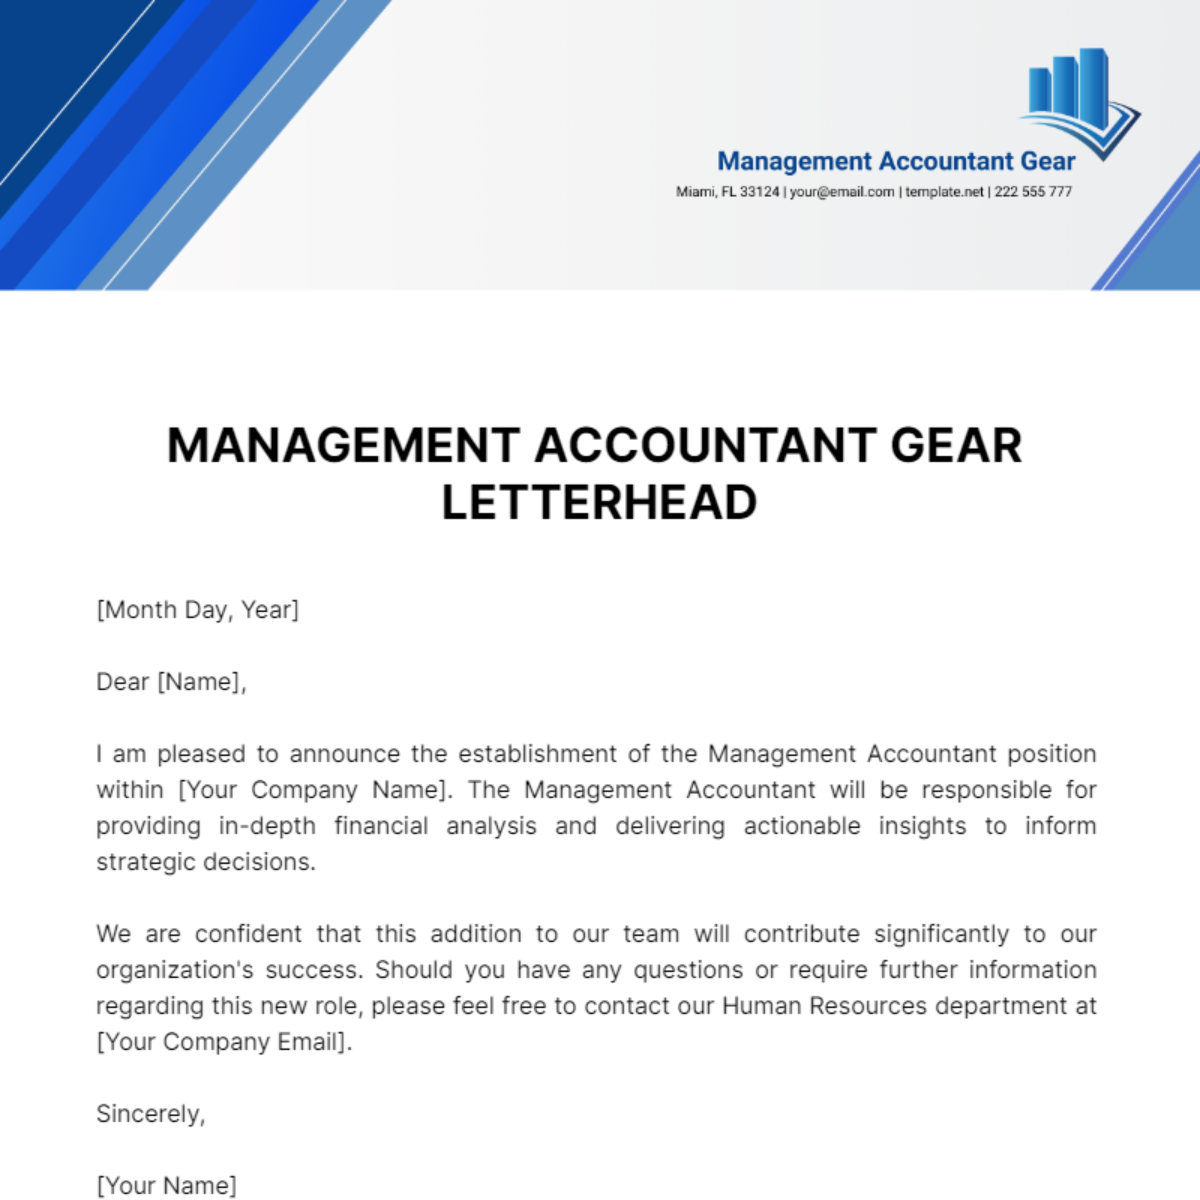 Free Management Accountant Gear Letterhead Template